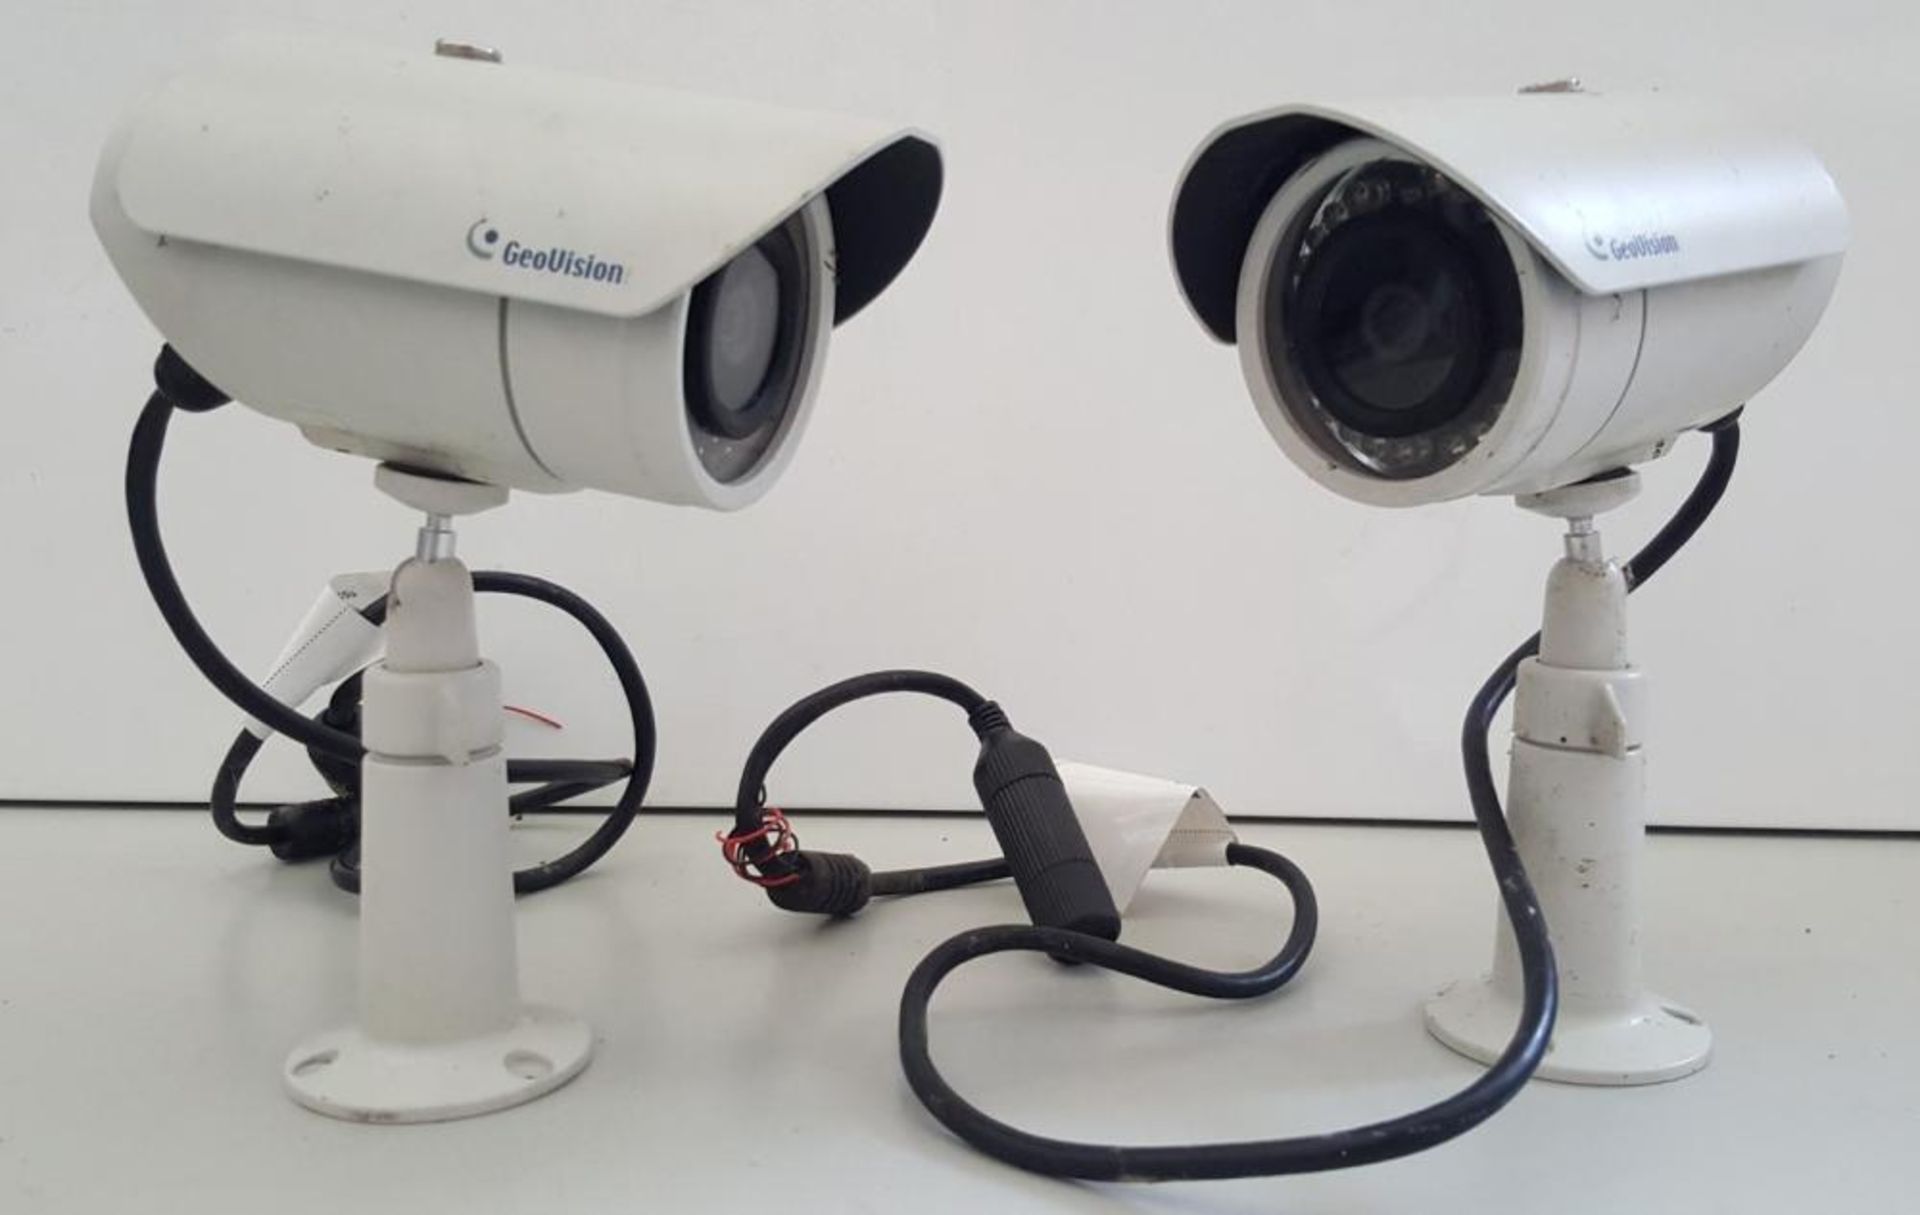 4 x Geovision Security Cameras (2 x GV-EFD1100, 2 x GV-EBL1100) - Ref CQ230/K2 - CL379 - Location: A - Image 5 of 5